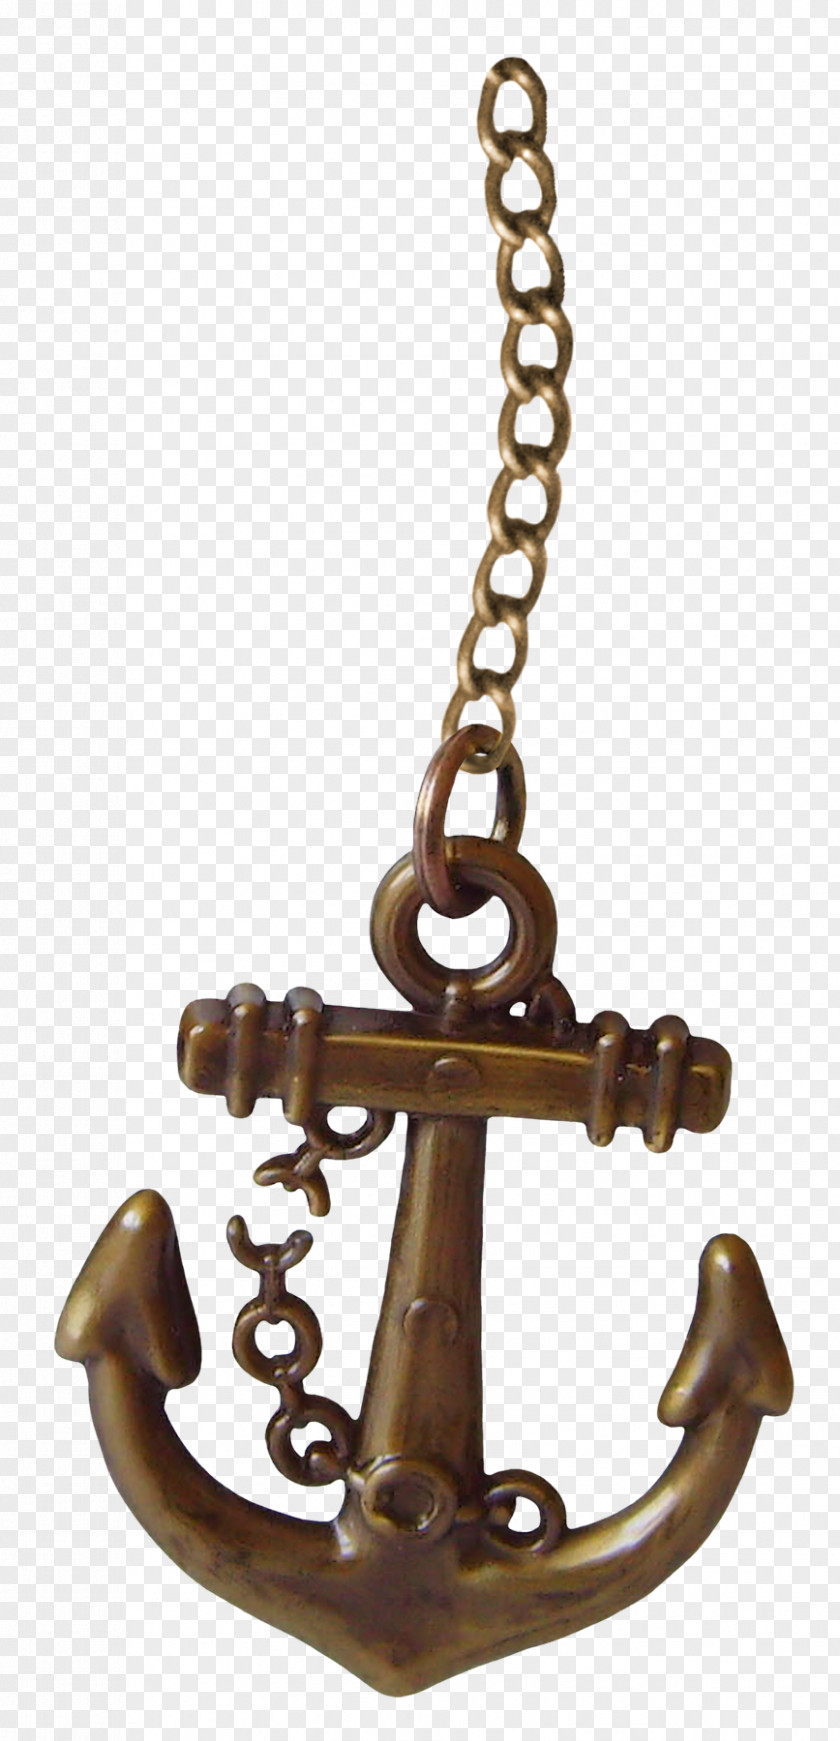 Metal Anchor Chains Chain Clip Art PNG